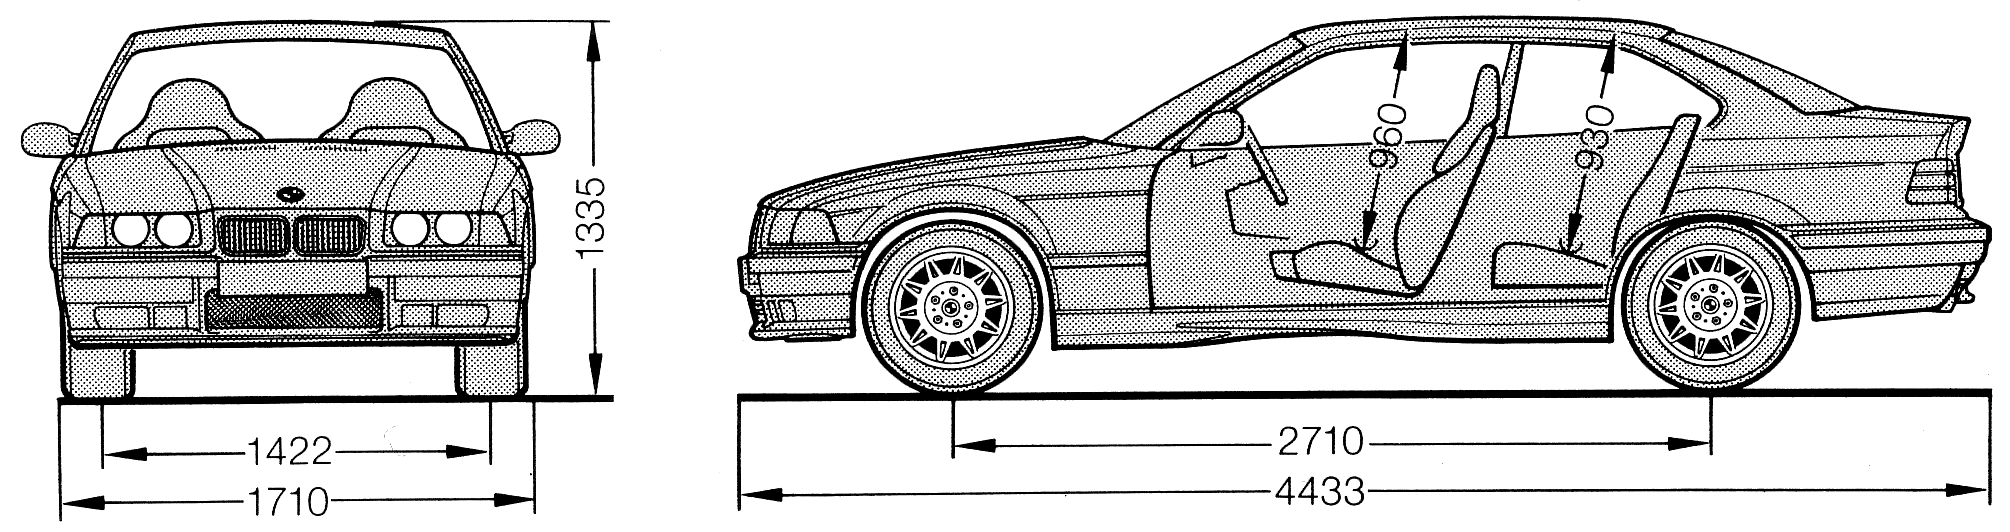 Bmw e36 coupe blueprints #1